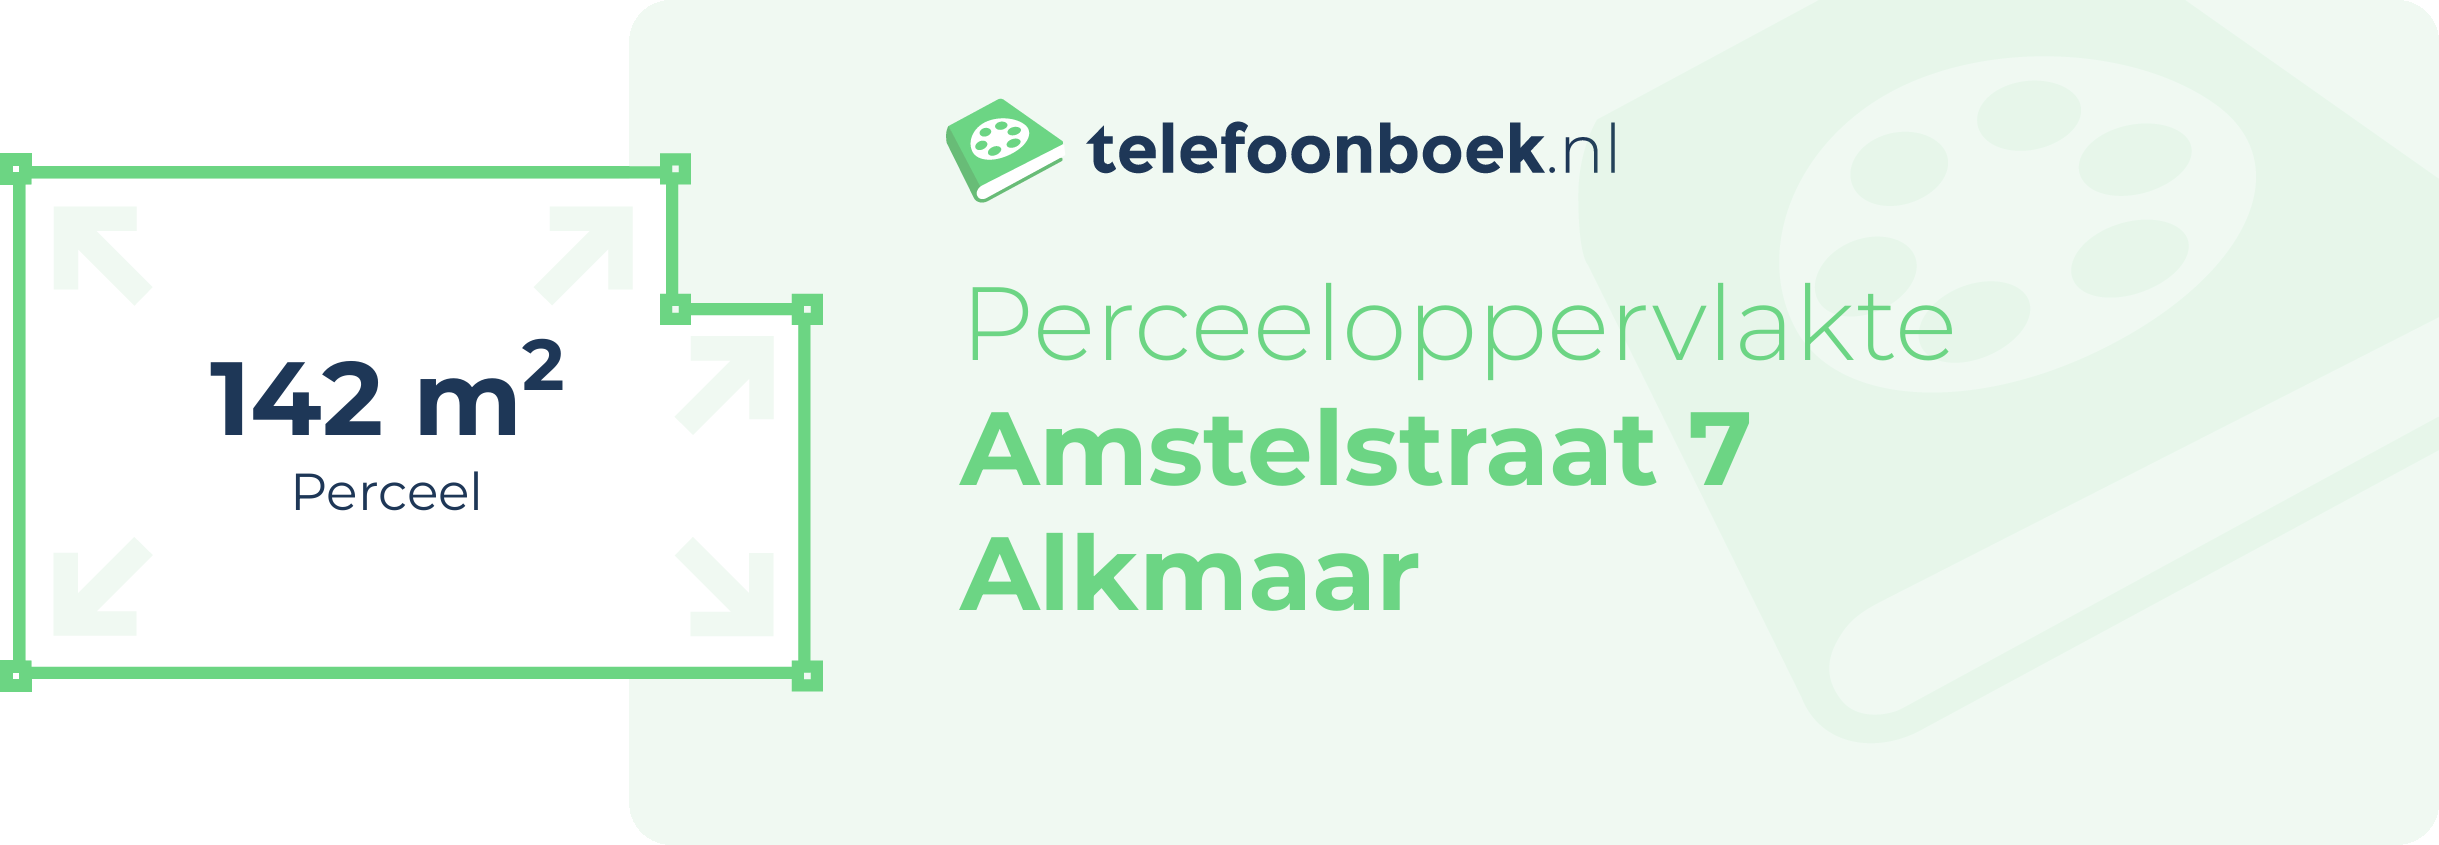 Perceeloppervlakte Amstelstraat 7 Alkmaar